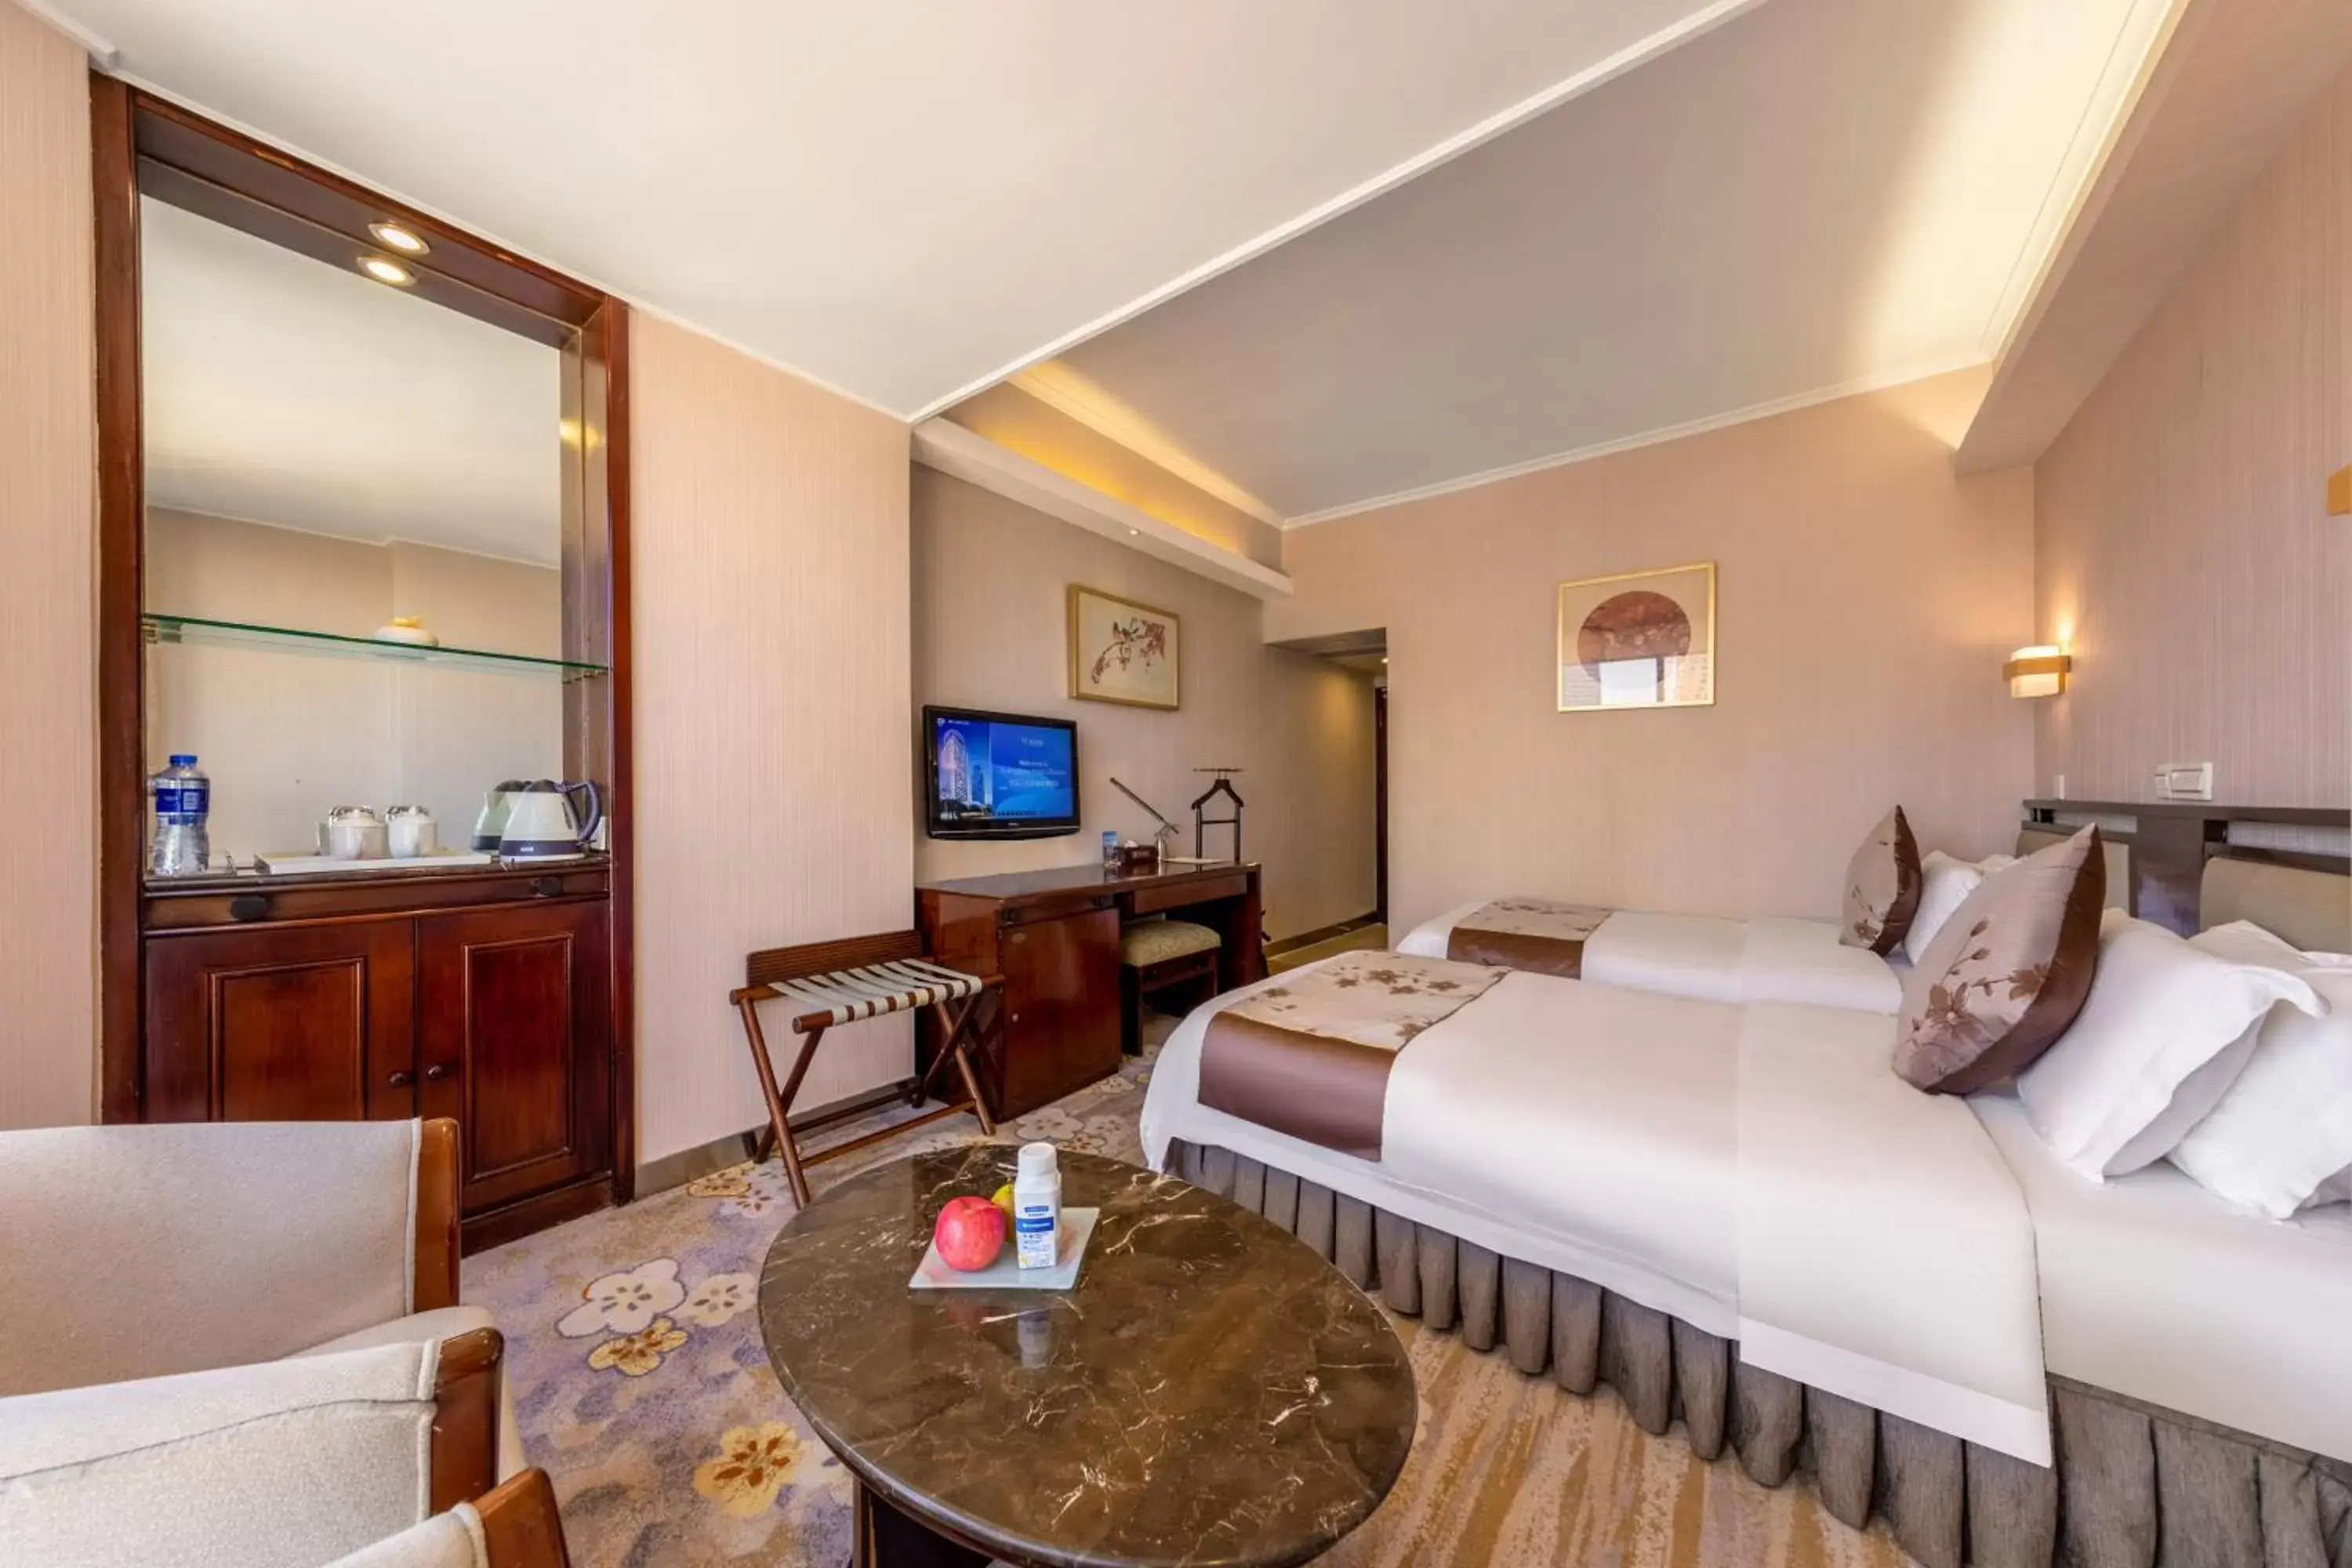 Bed in Guangdong Hotel (Zhuhai)